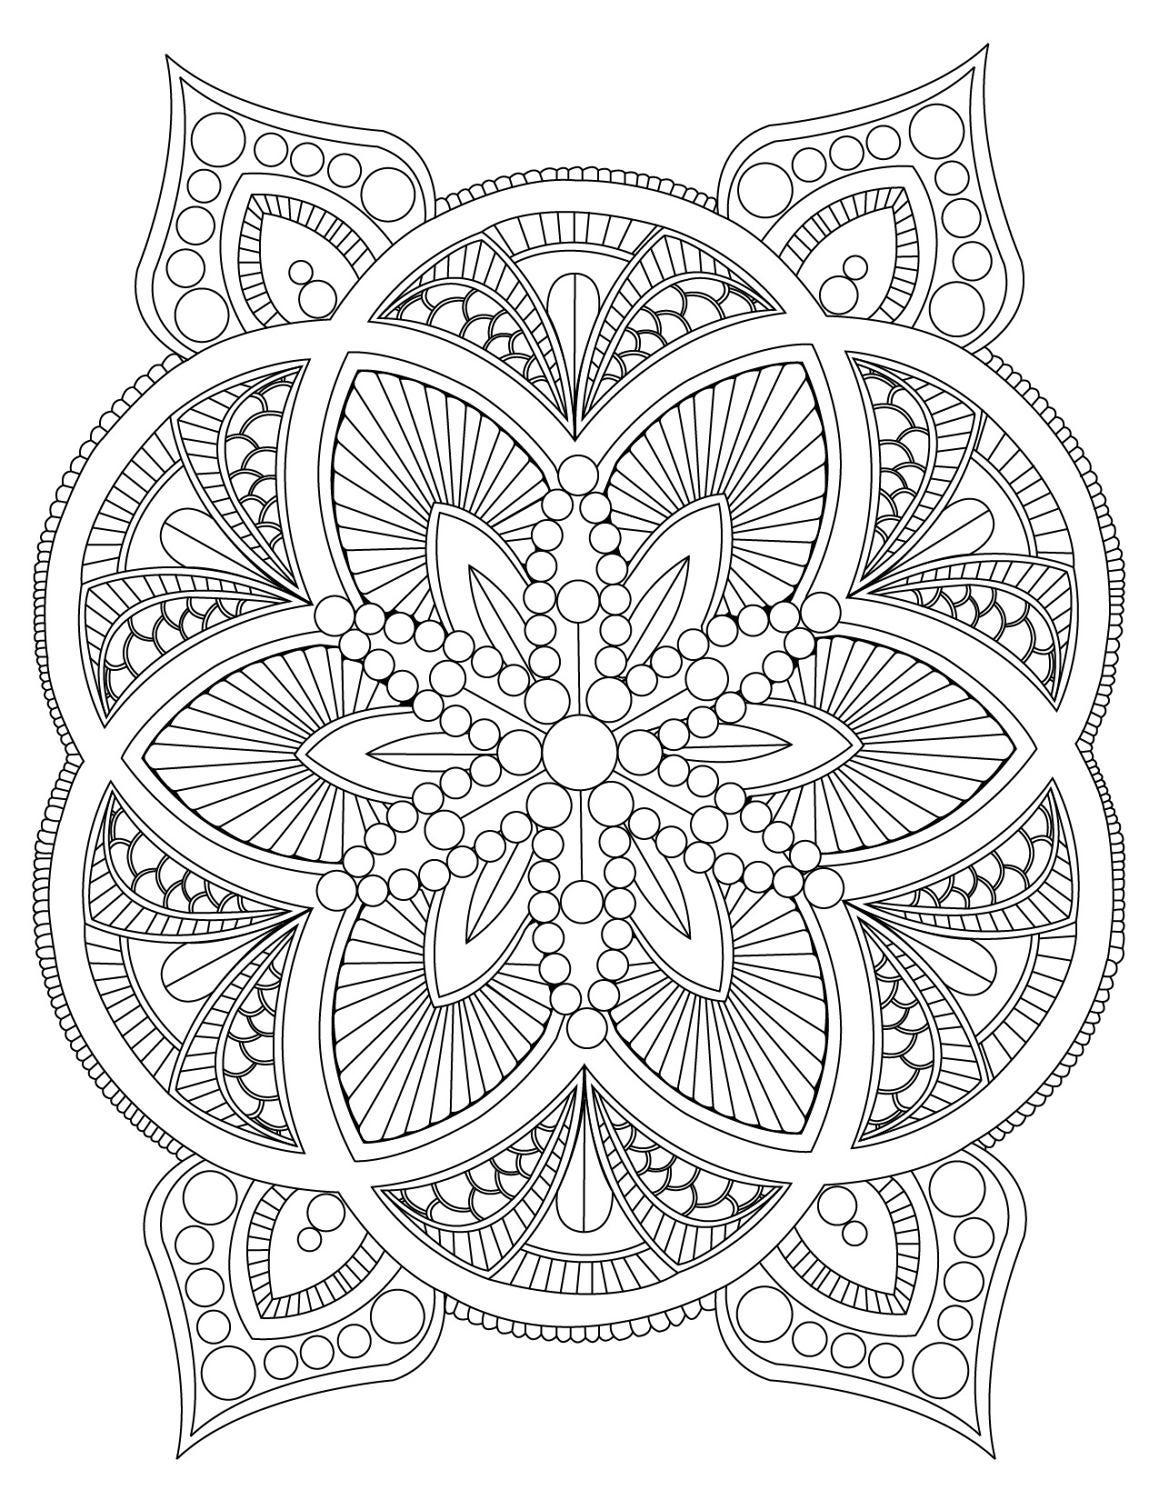 Abstract Mandala Coloring Page for Adults DIY Printable